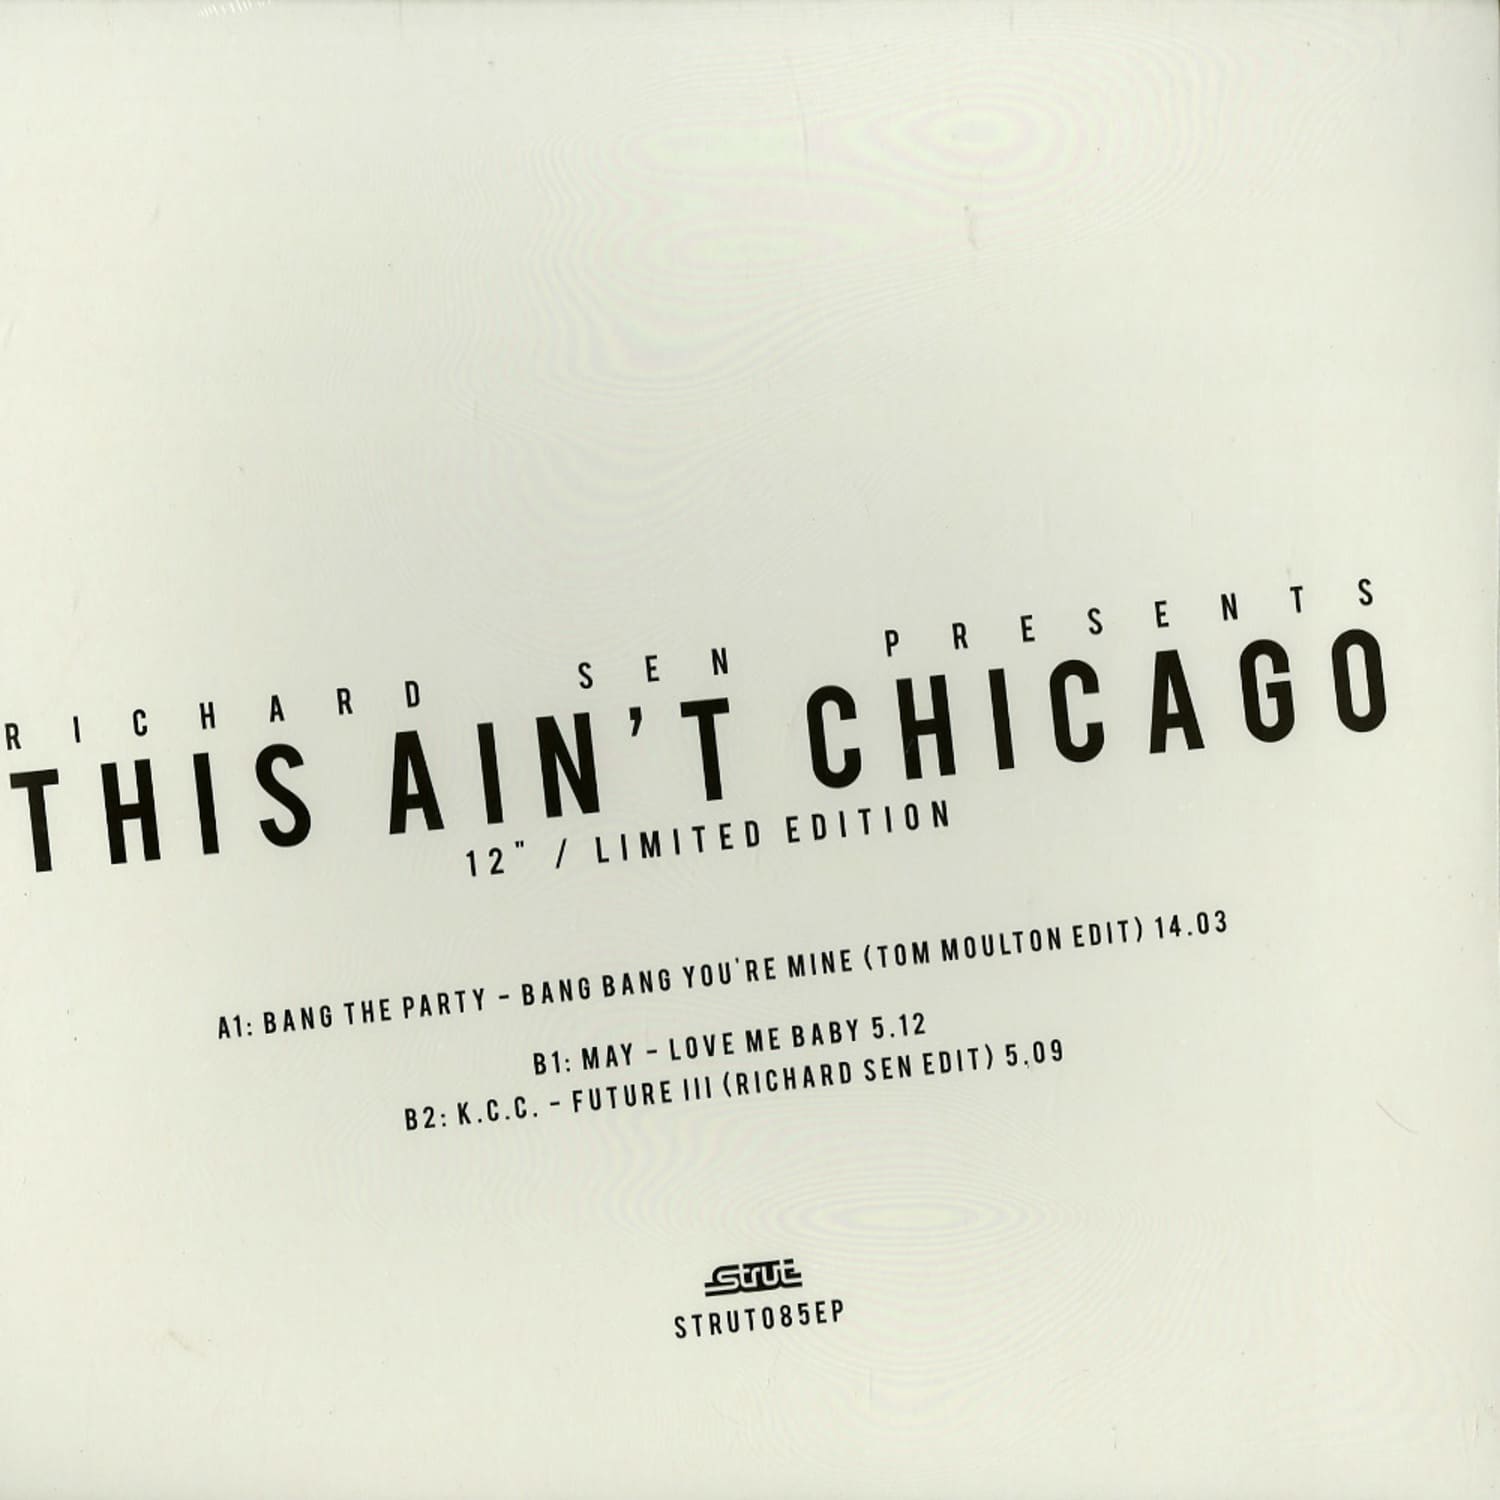 Bang The Party / May / K.C.C. - RICHARD SEN PRESENTS THIS AINT CHICAGO